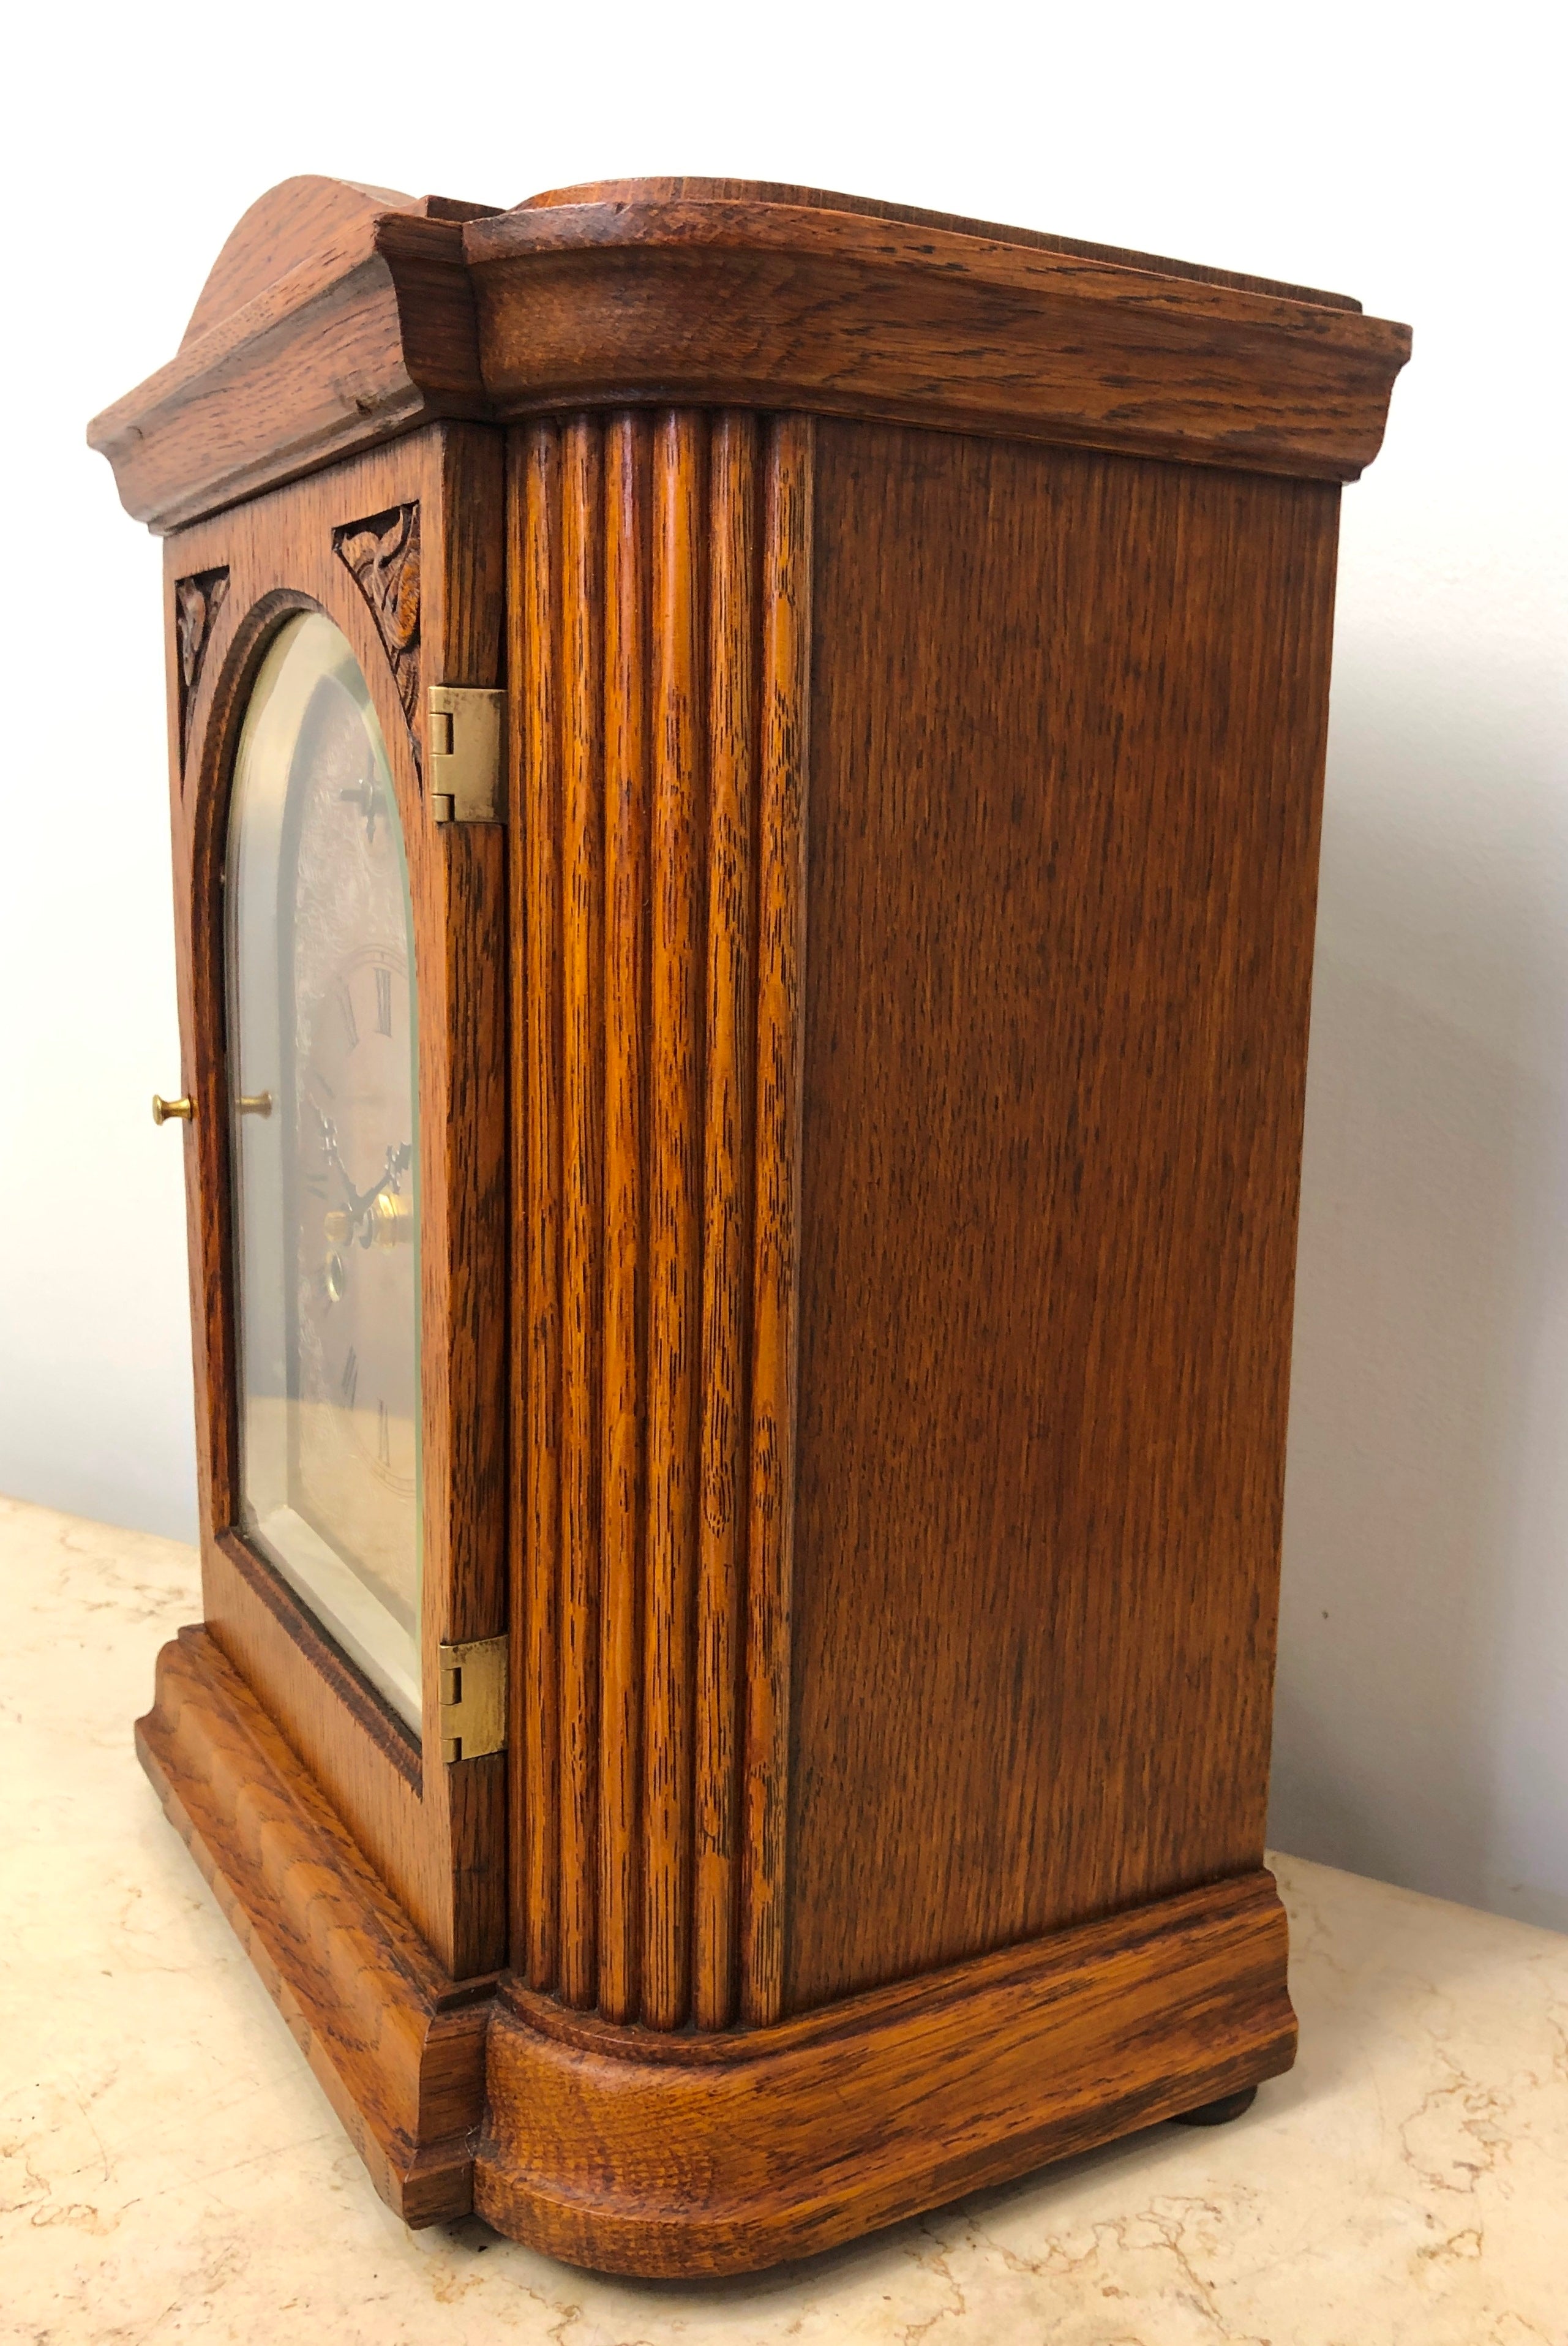 Original Antique HAC Mantel Clock | eXibit collectionOriginal Antique HAC Battery Mantel Clock | eXibit collection